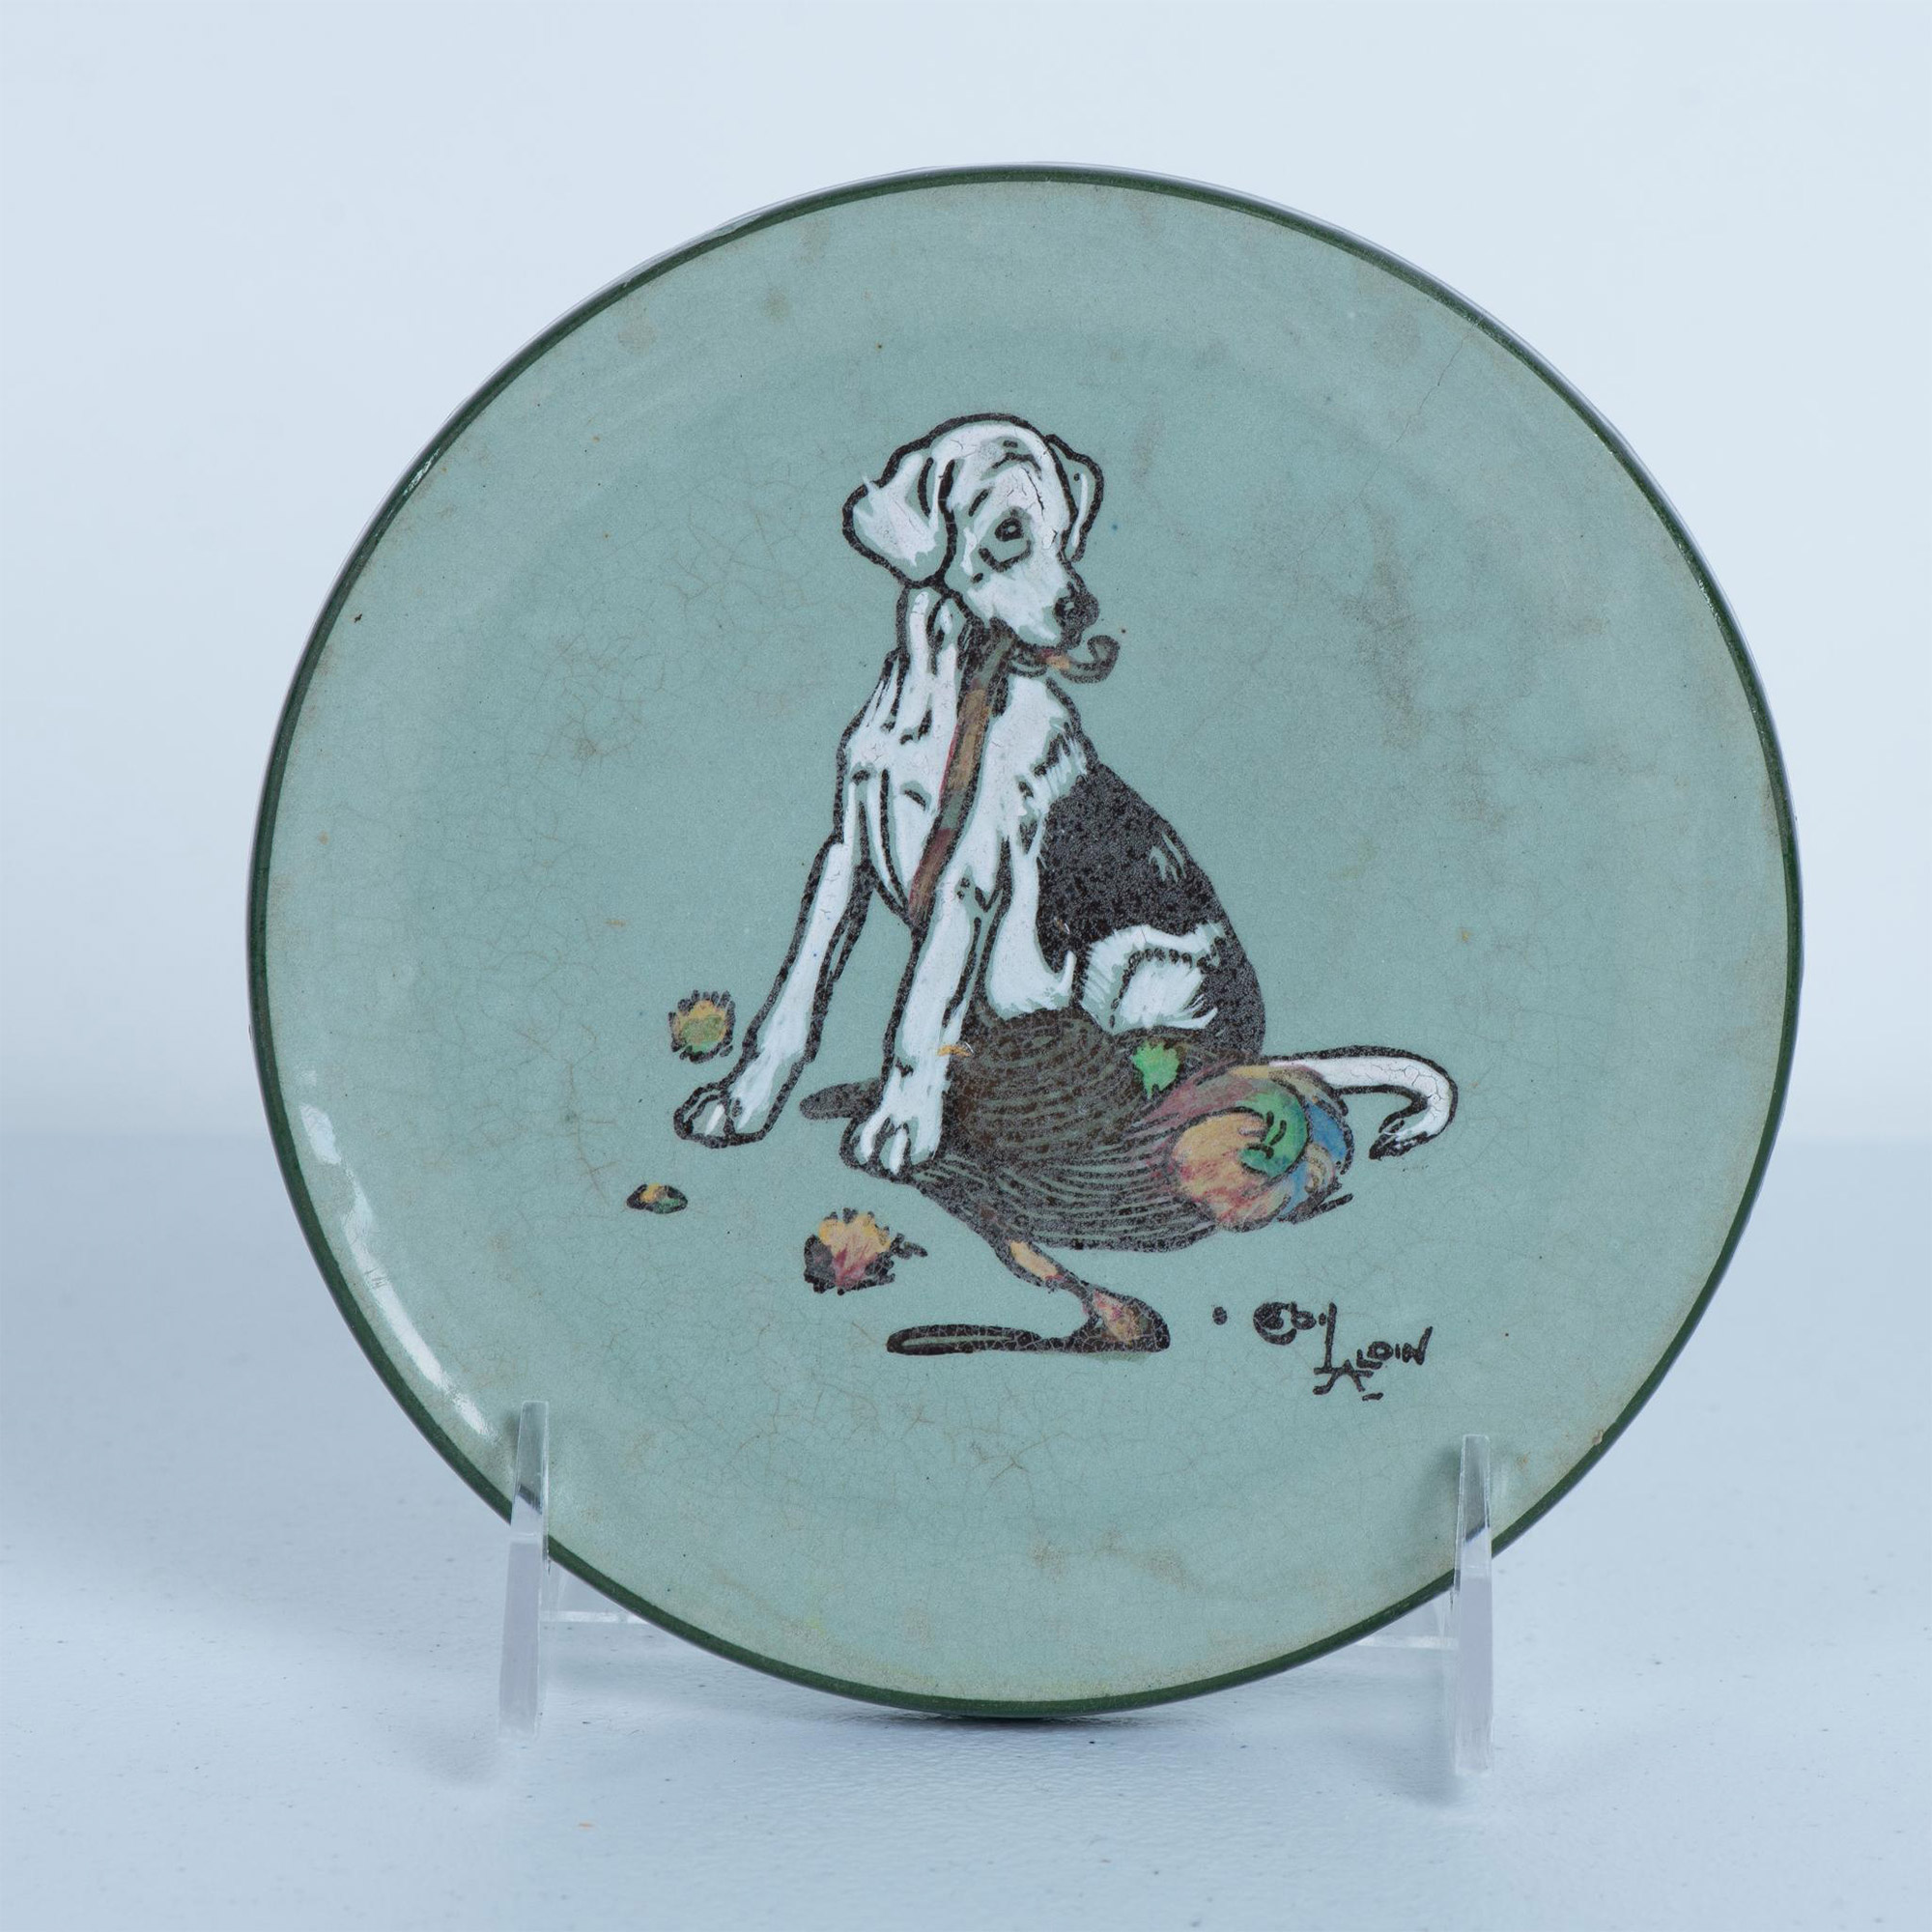 2pc Royal Doulton Cecil Aldin Seriesware - Dog Plaques - Image 6 of 11